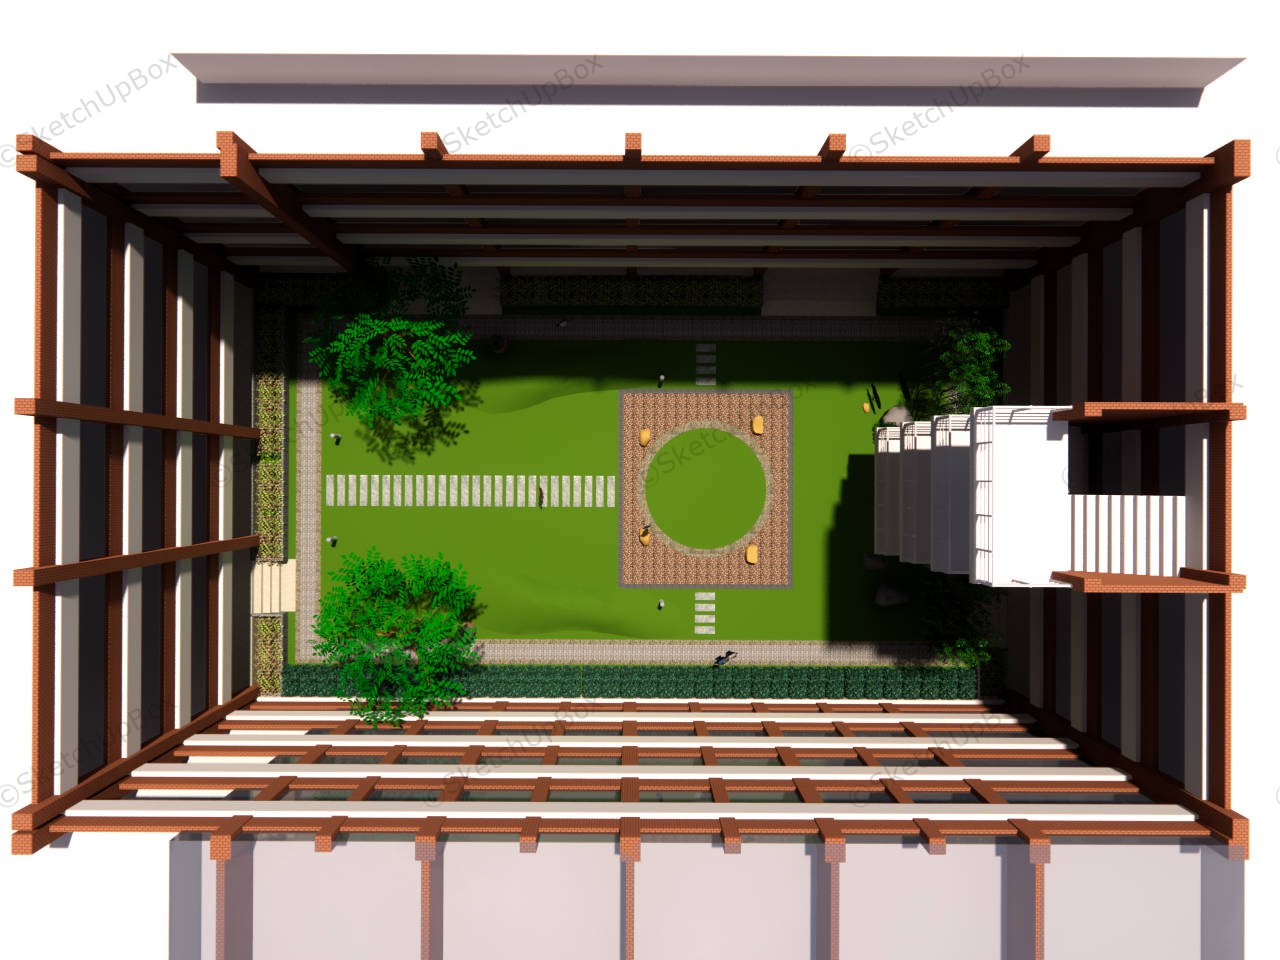 Open Atrium Design sketchup model preview - SketchupBox